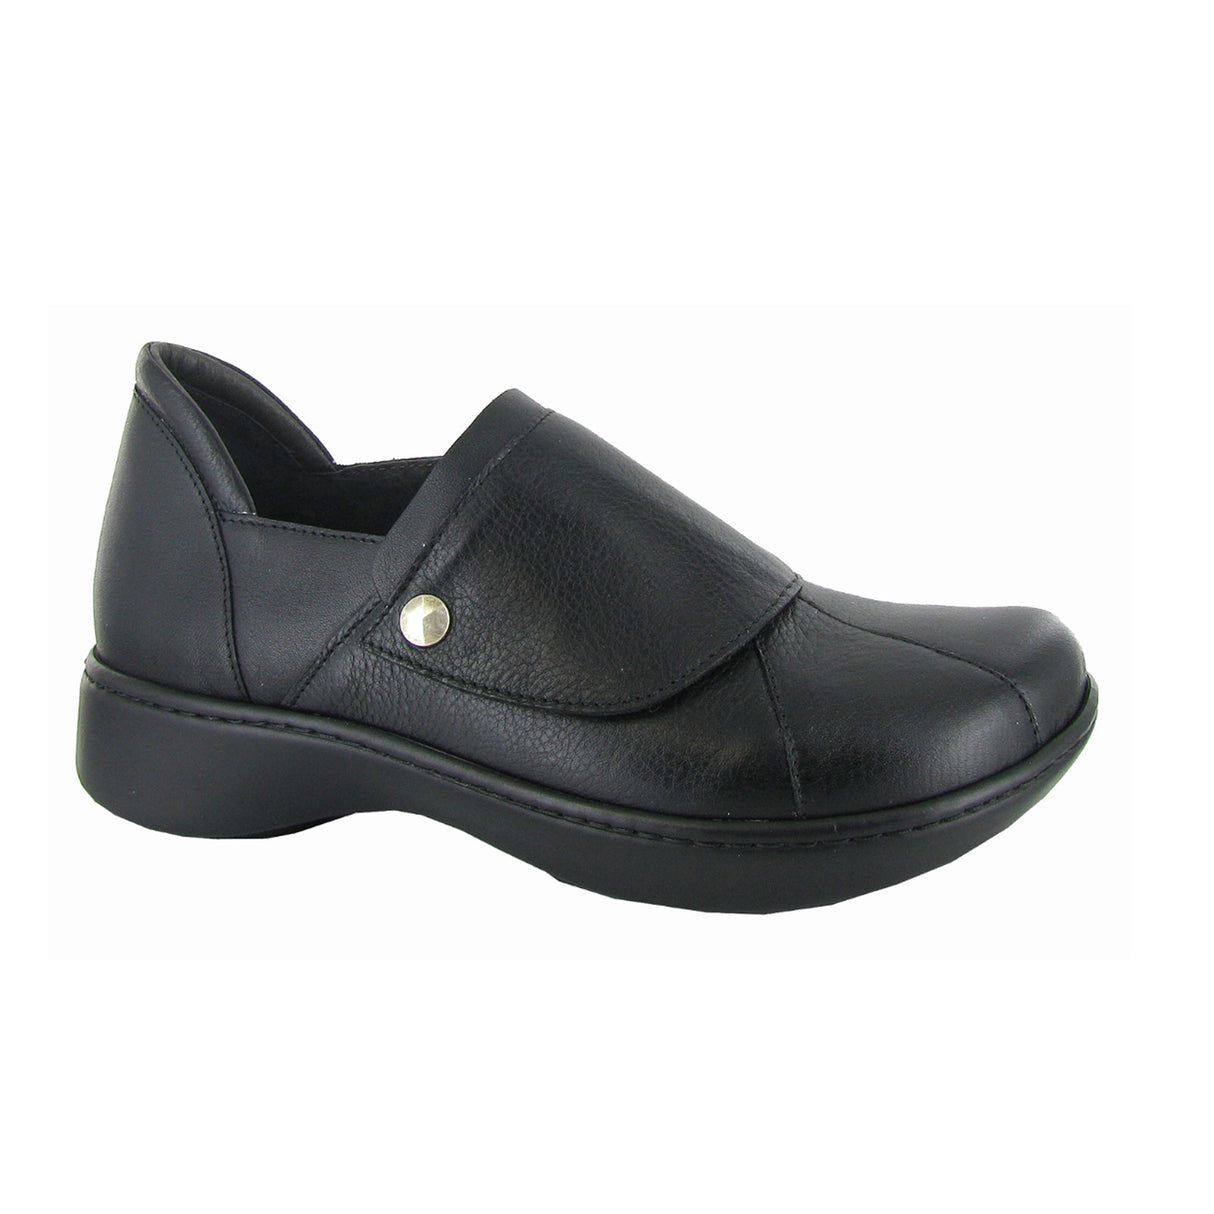 Naot Lagoon Slip On (Women) - Soft Black/Jet Black Dress-Casual - Monk Straps - The Heel Shoe Fitters